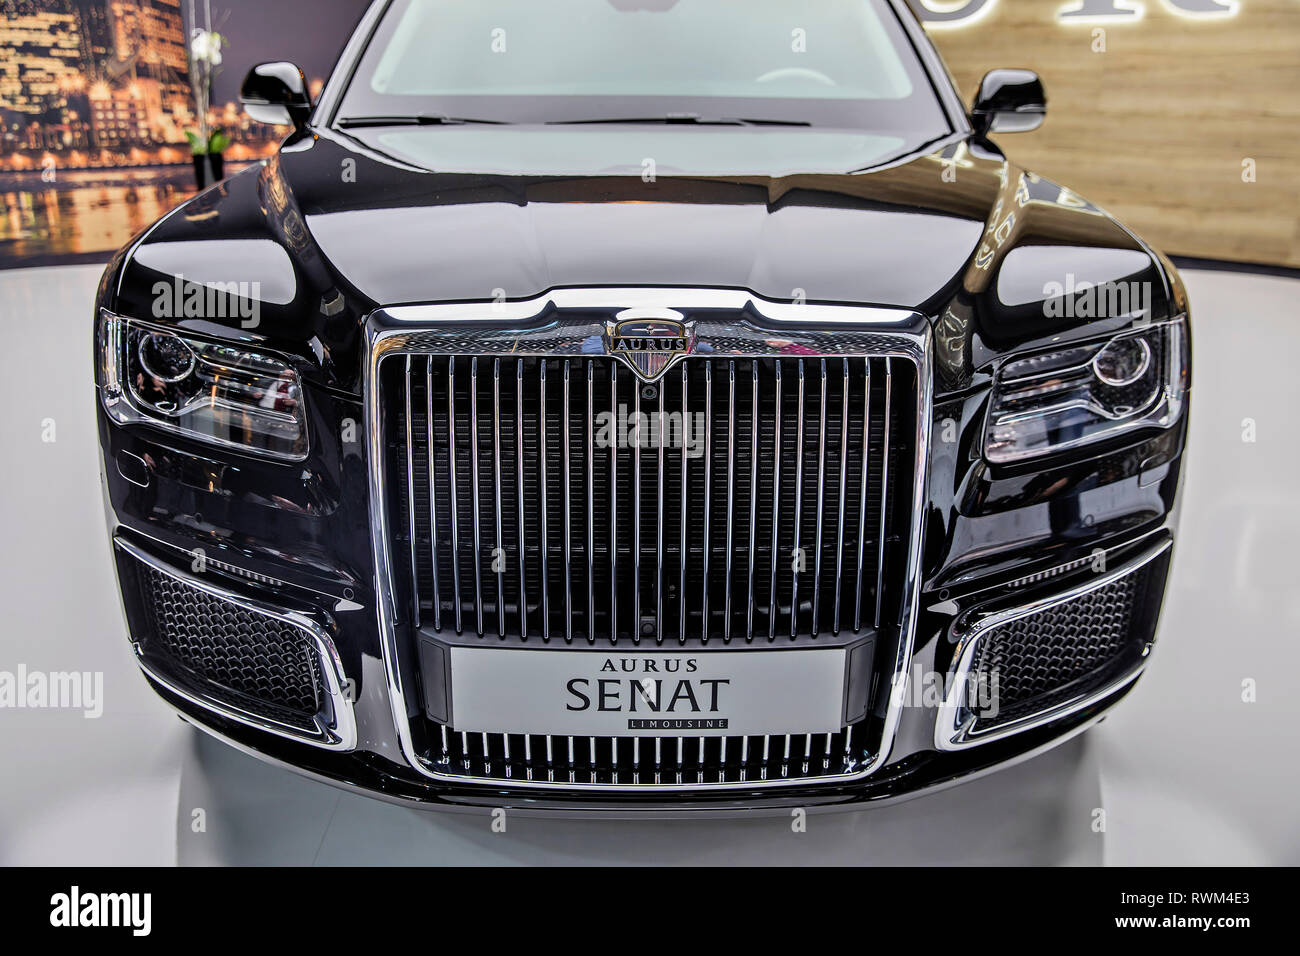 https://c8.alamy.com/comp/RWM4E3/aurus-senat-russian-luxury-limousine-that-carries-also-russian-president-vladimir-putin-was-presented-during-the-2019-geneva-international-motor-sh-RWM4E3.jpg